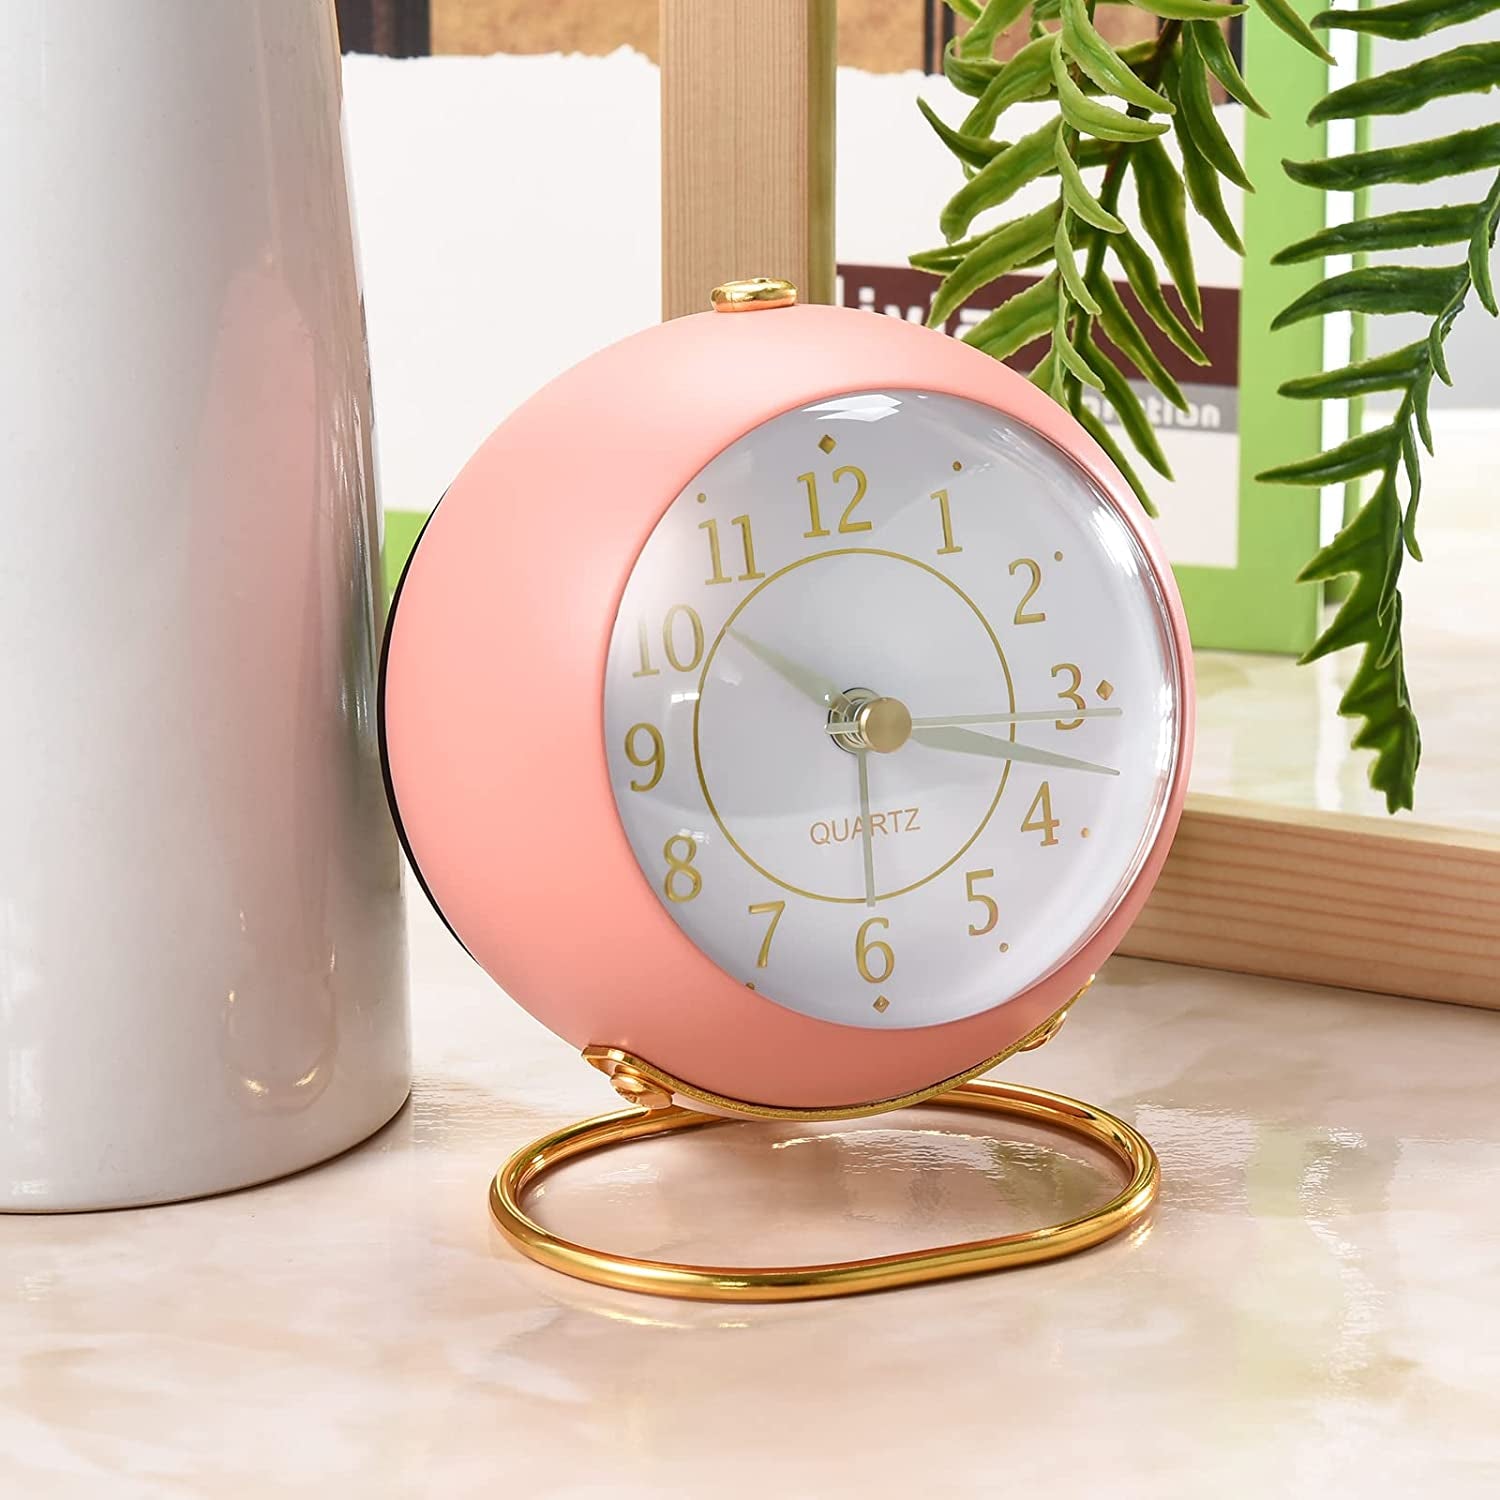 Analog Alarm Clocks,Retro Backlight Cute Simple Design Small Desk Clock with Night Light,Silent Non-Ticking,Battery Powered,For Kids,Bedroom,Travel,Kitchen,Bedside Desktop.(White)